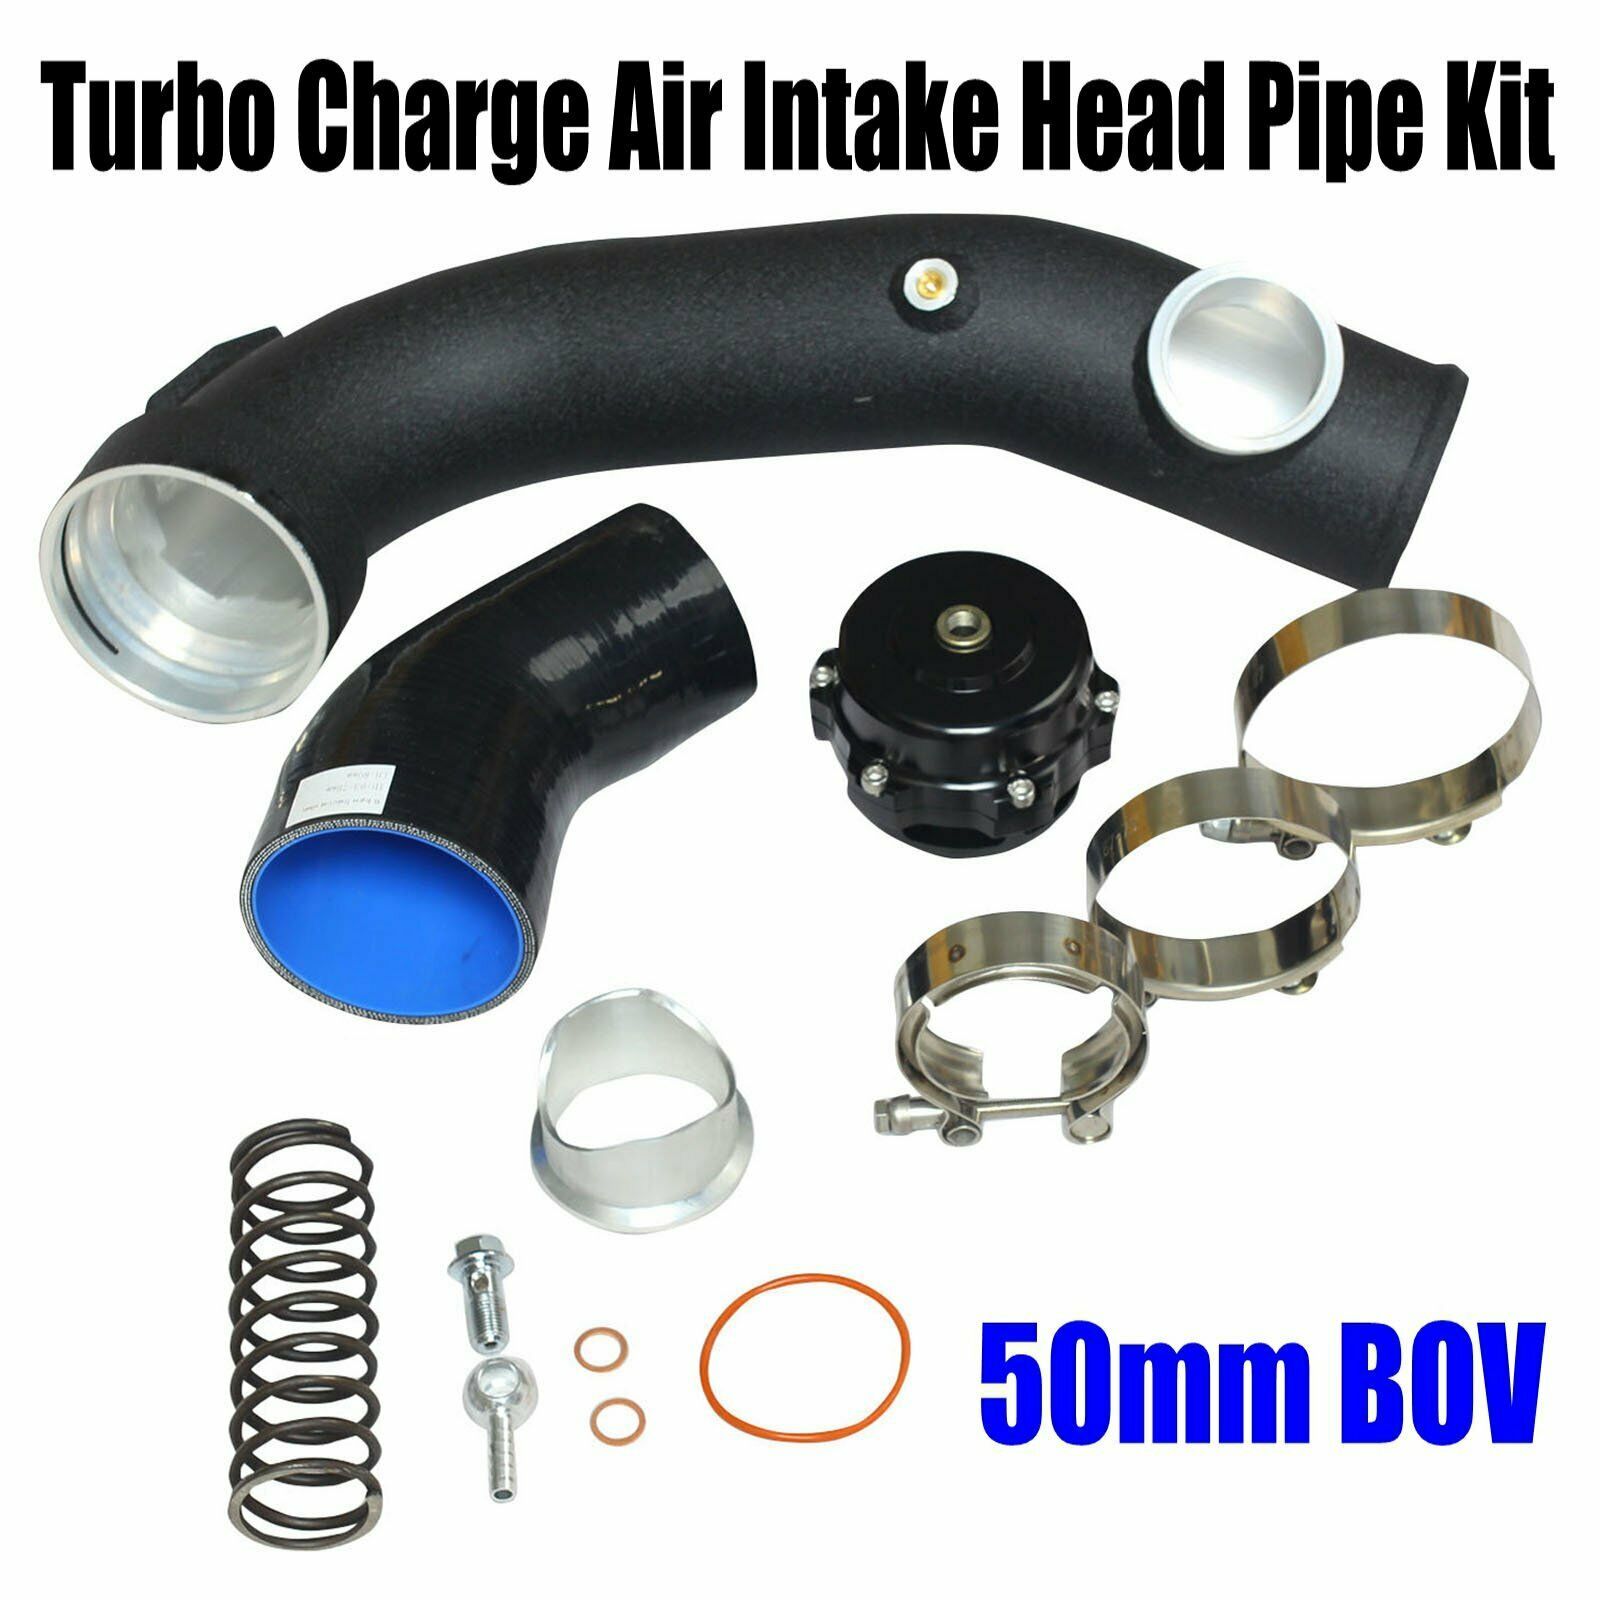 50mm BOV Turbo Charge Air Intake Head Pipe Kit for BMW N54 E88 E90 E92 135i 335i